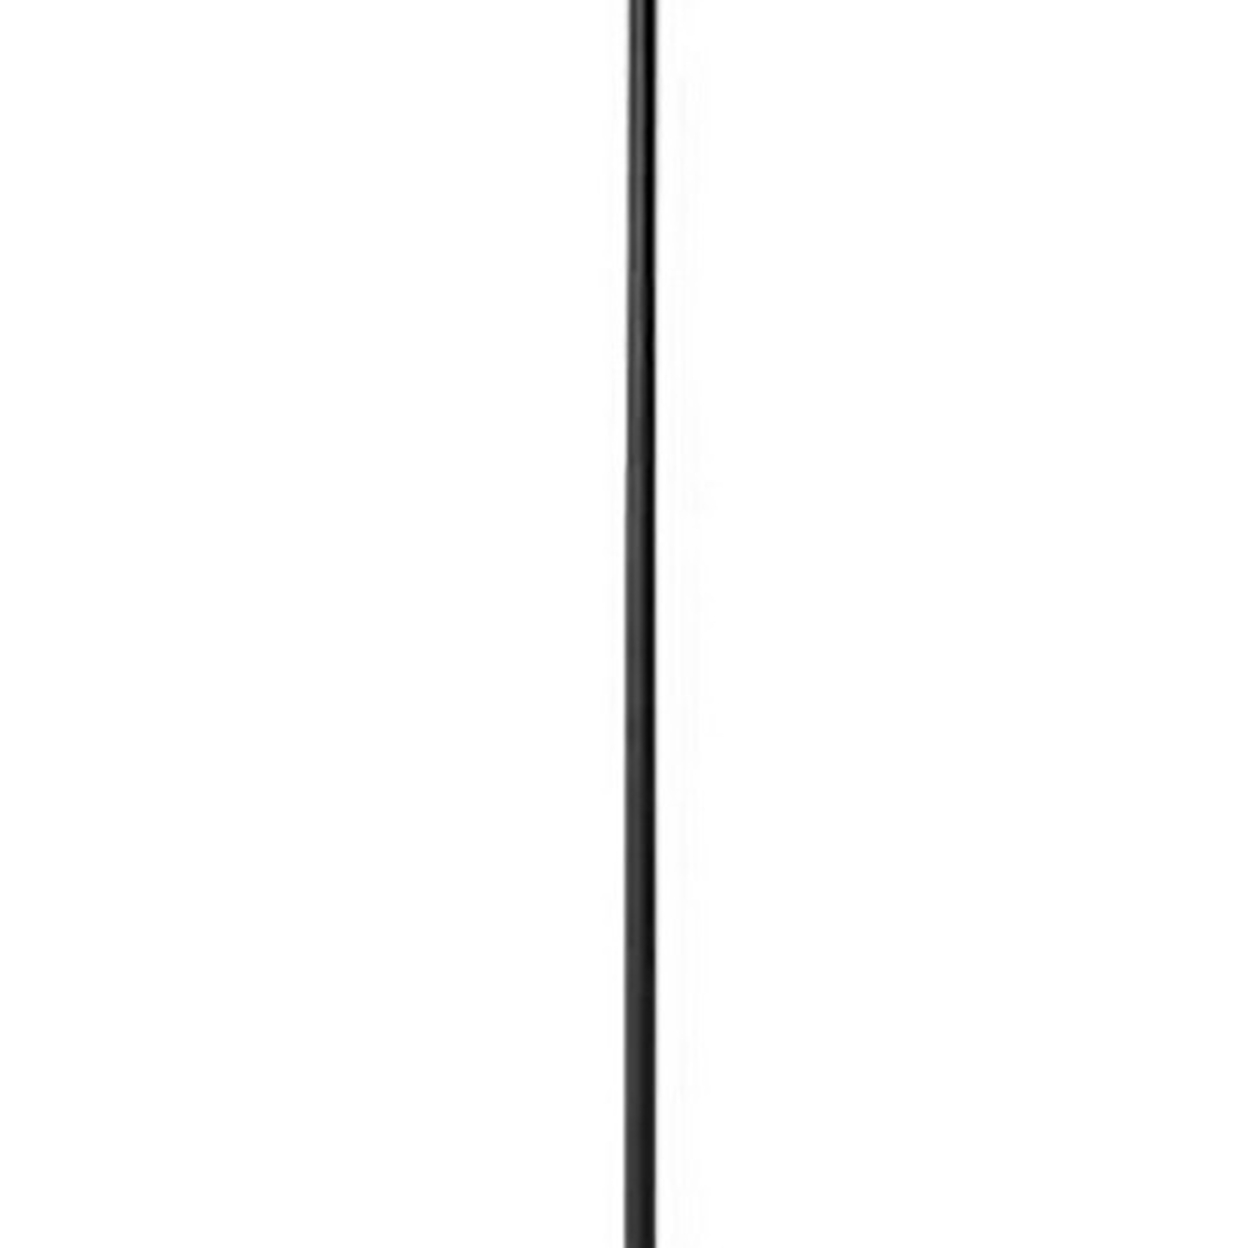 Floor Lamp With Adjustable Torchiere Head And Sleek Metal Body, Black- Saltoro Sherpi